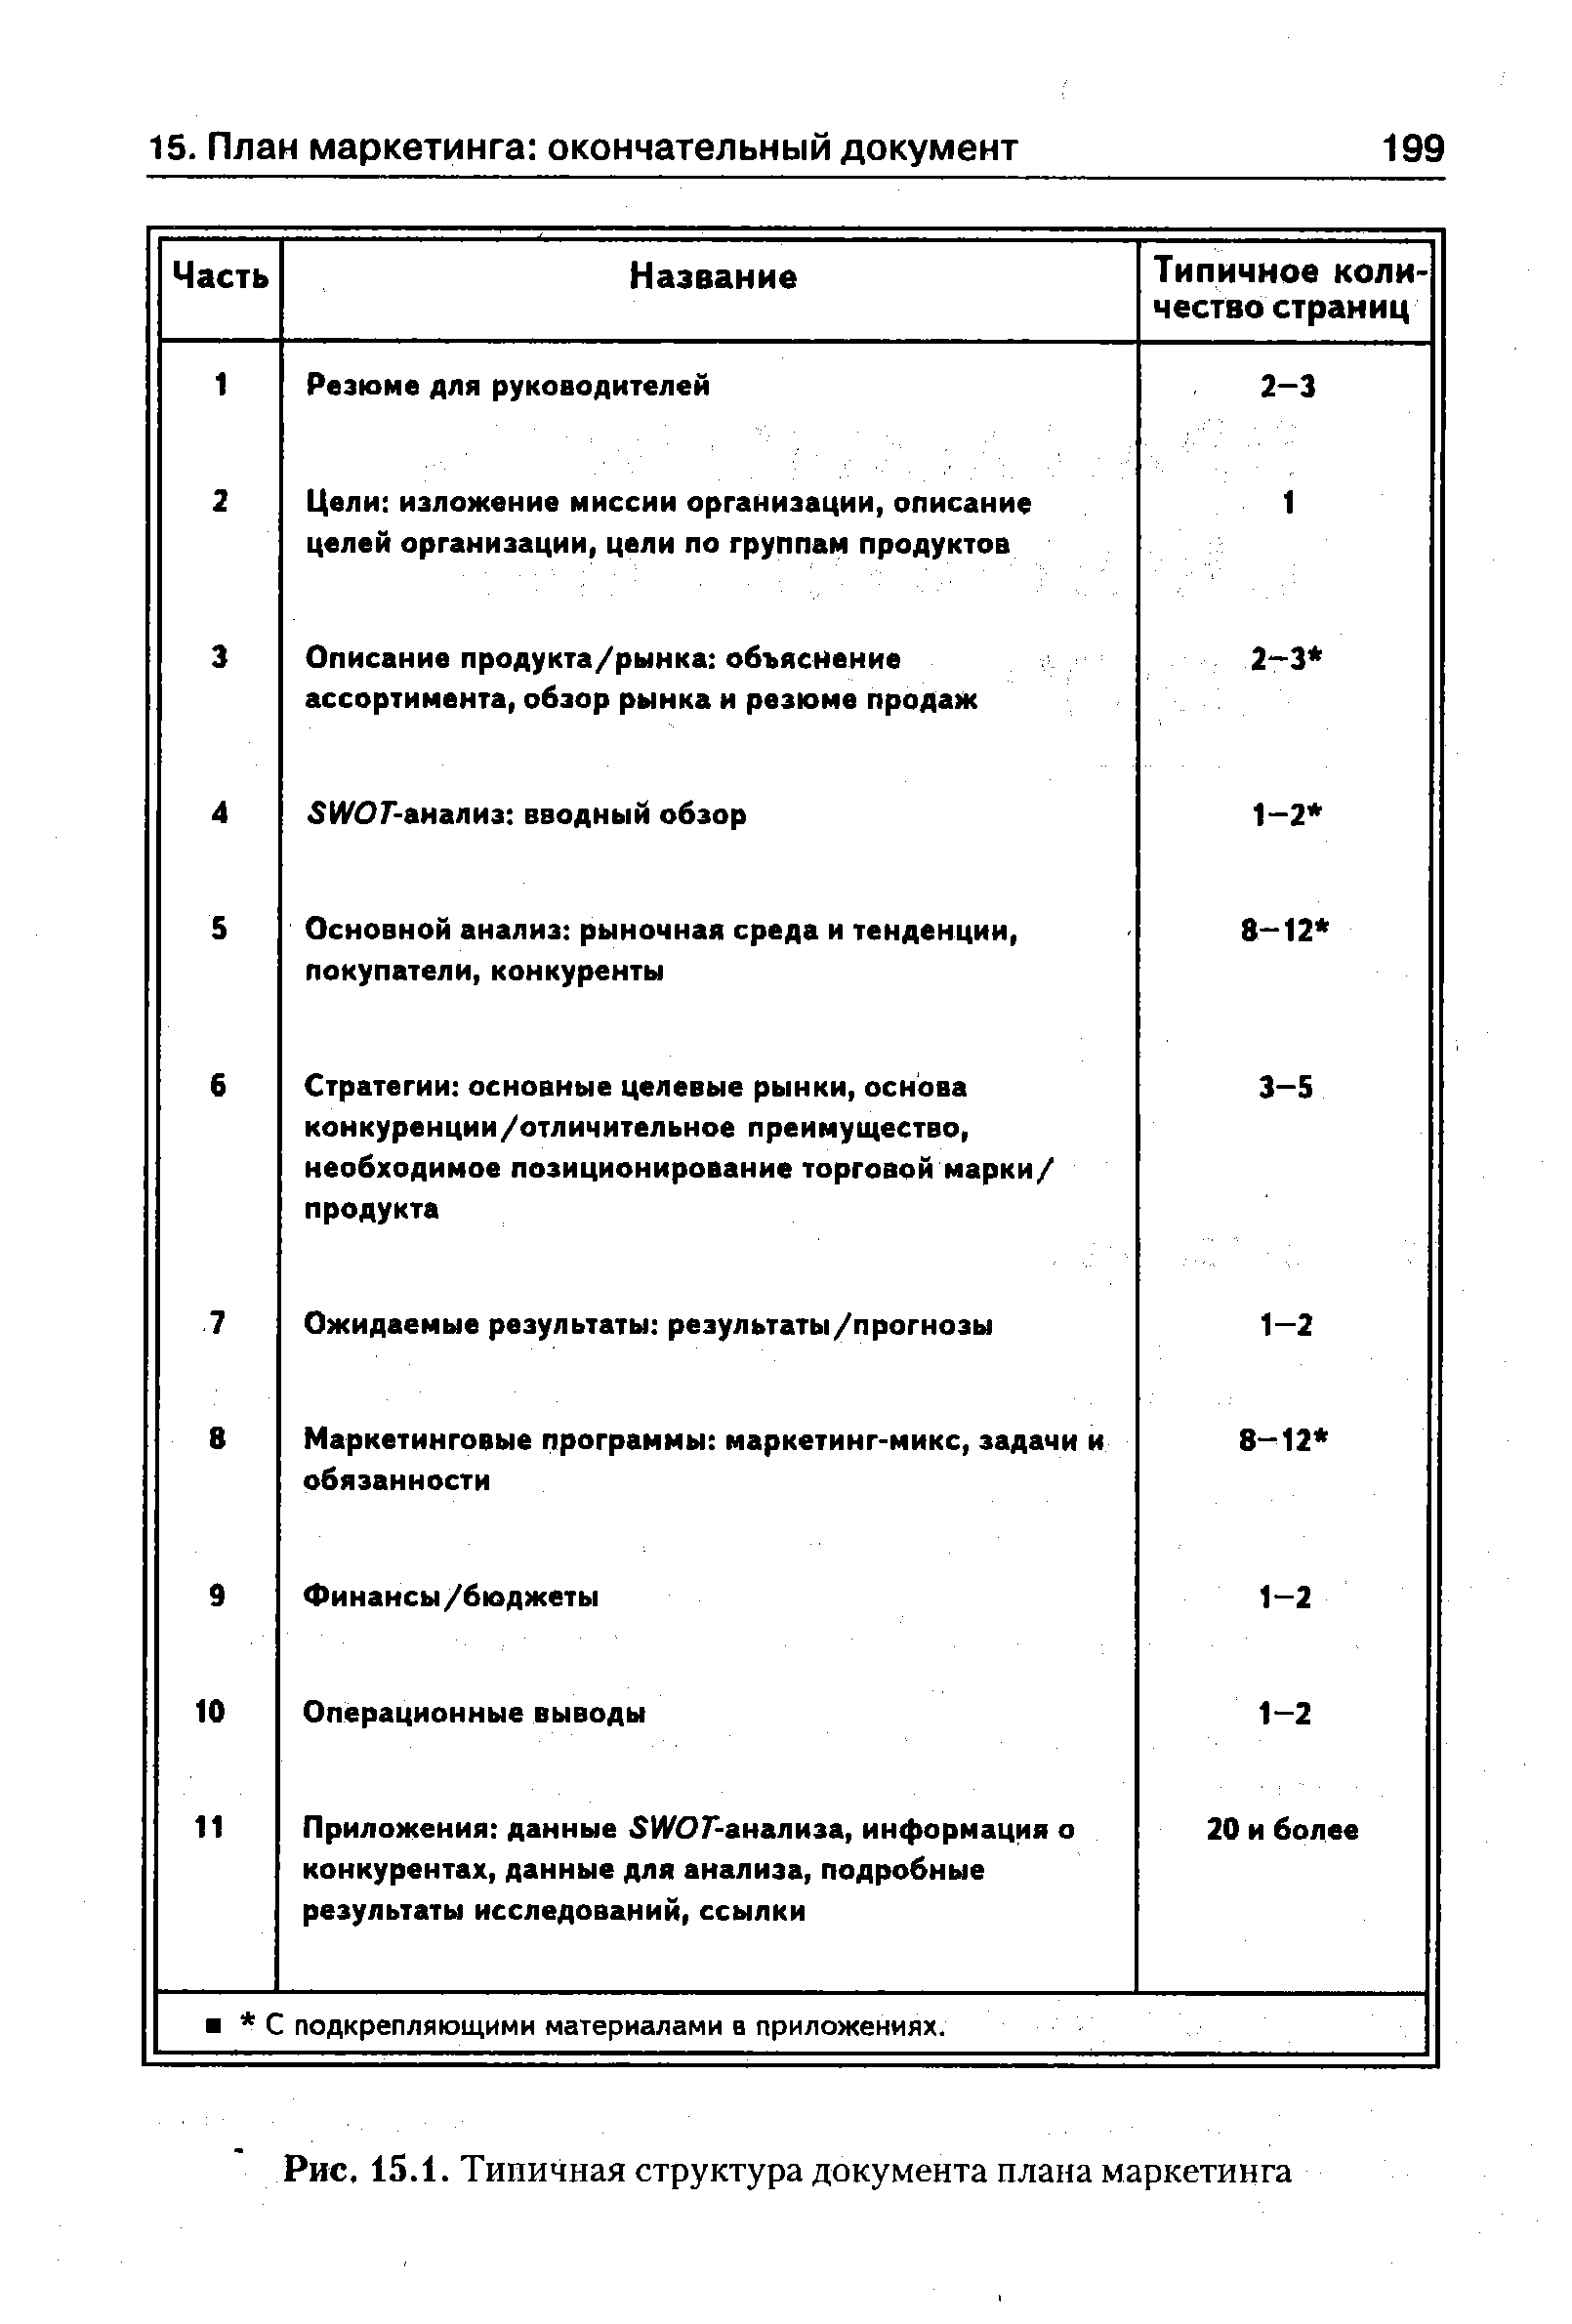 Рис. 15.1. Типичная структура документа плана маркетинга
